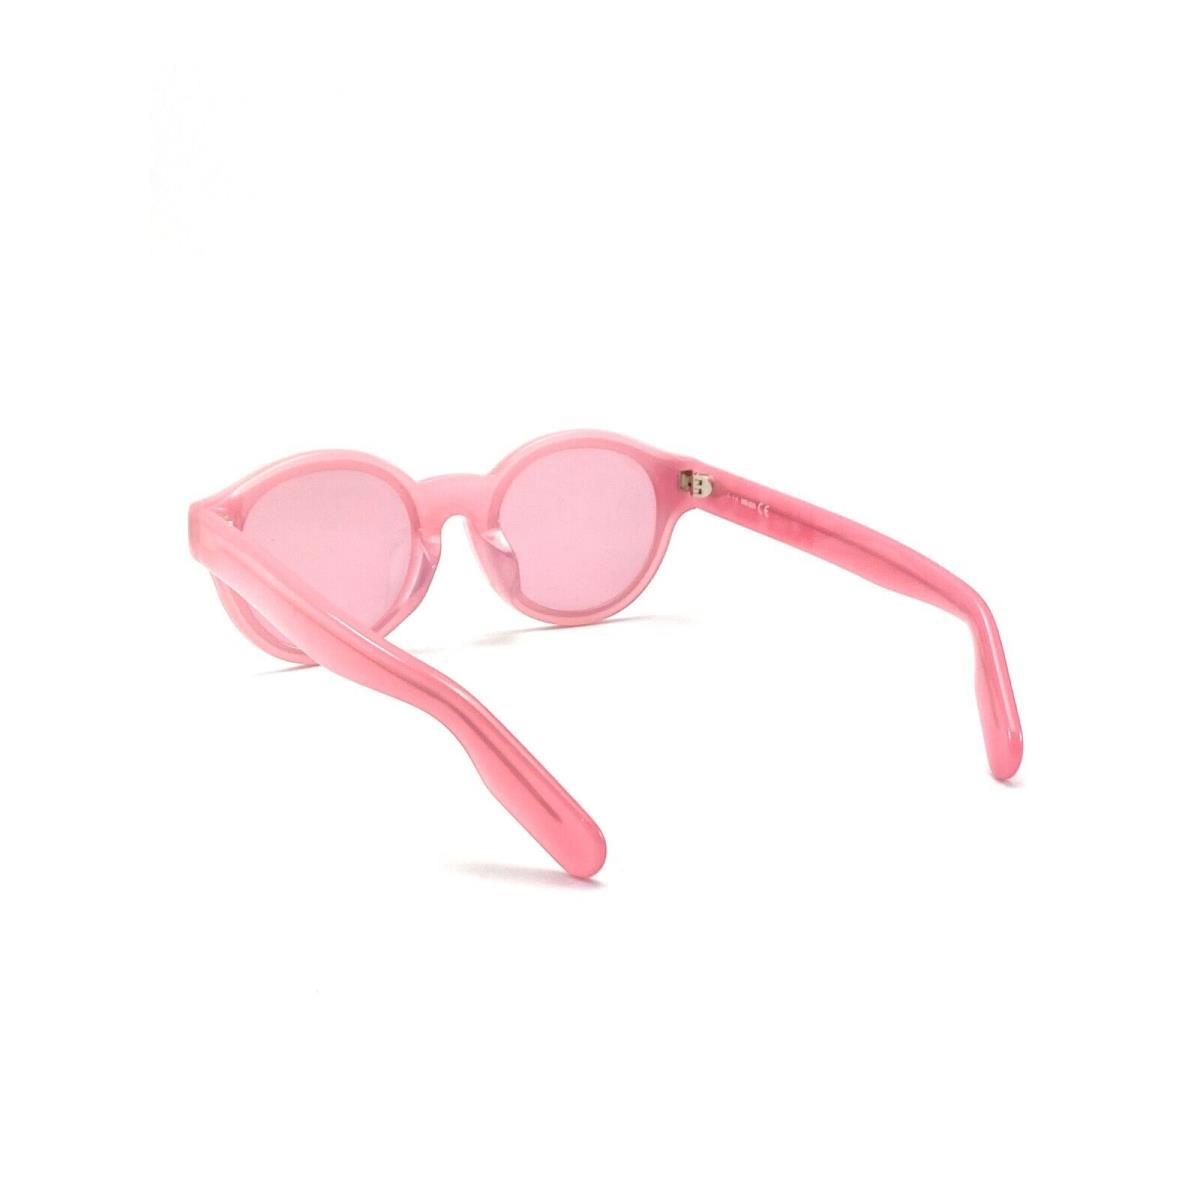 Kenzo sunglasses  - Pink Frame, Pink Lens